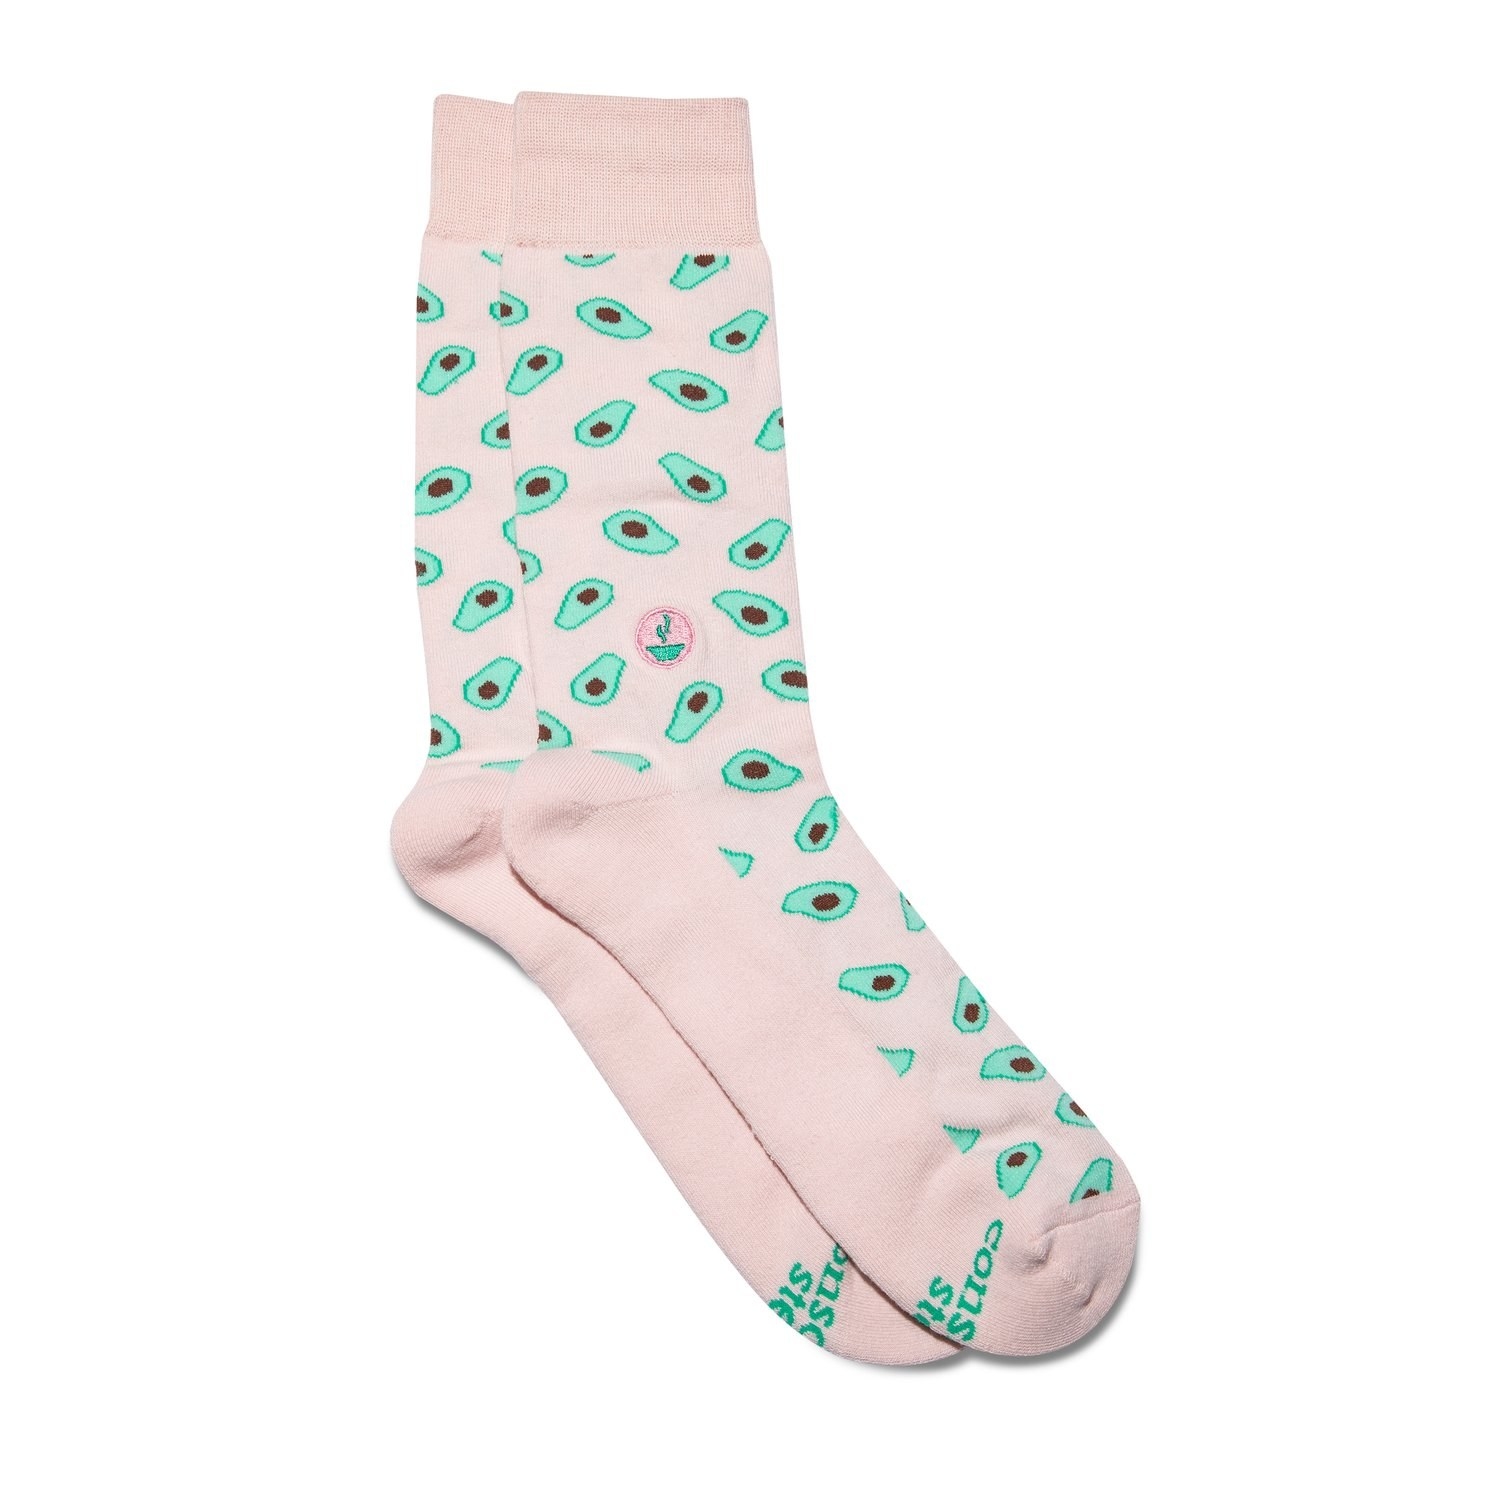 socks with cartoon avocados on them